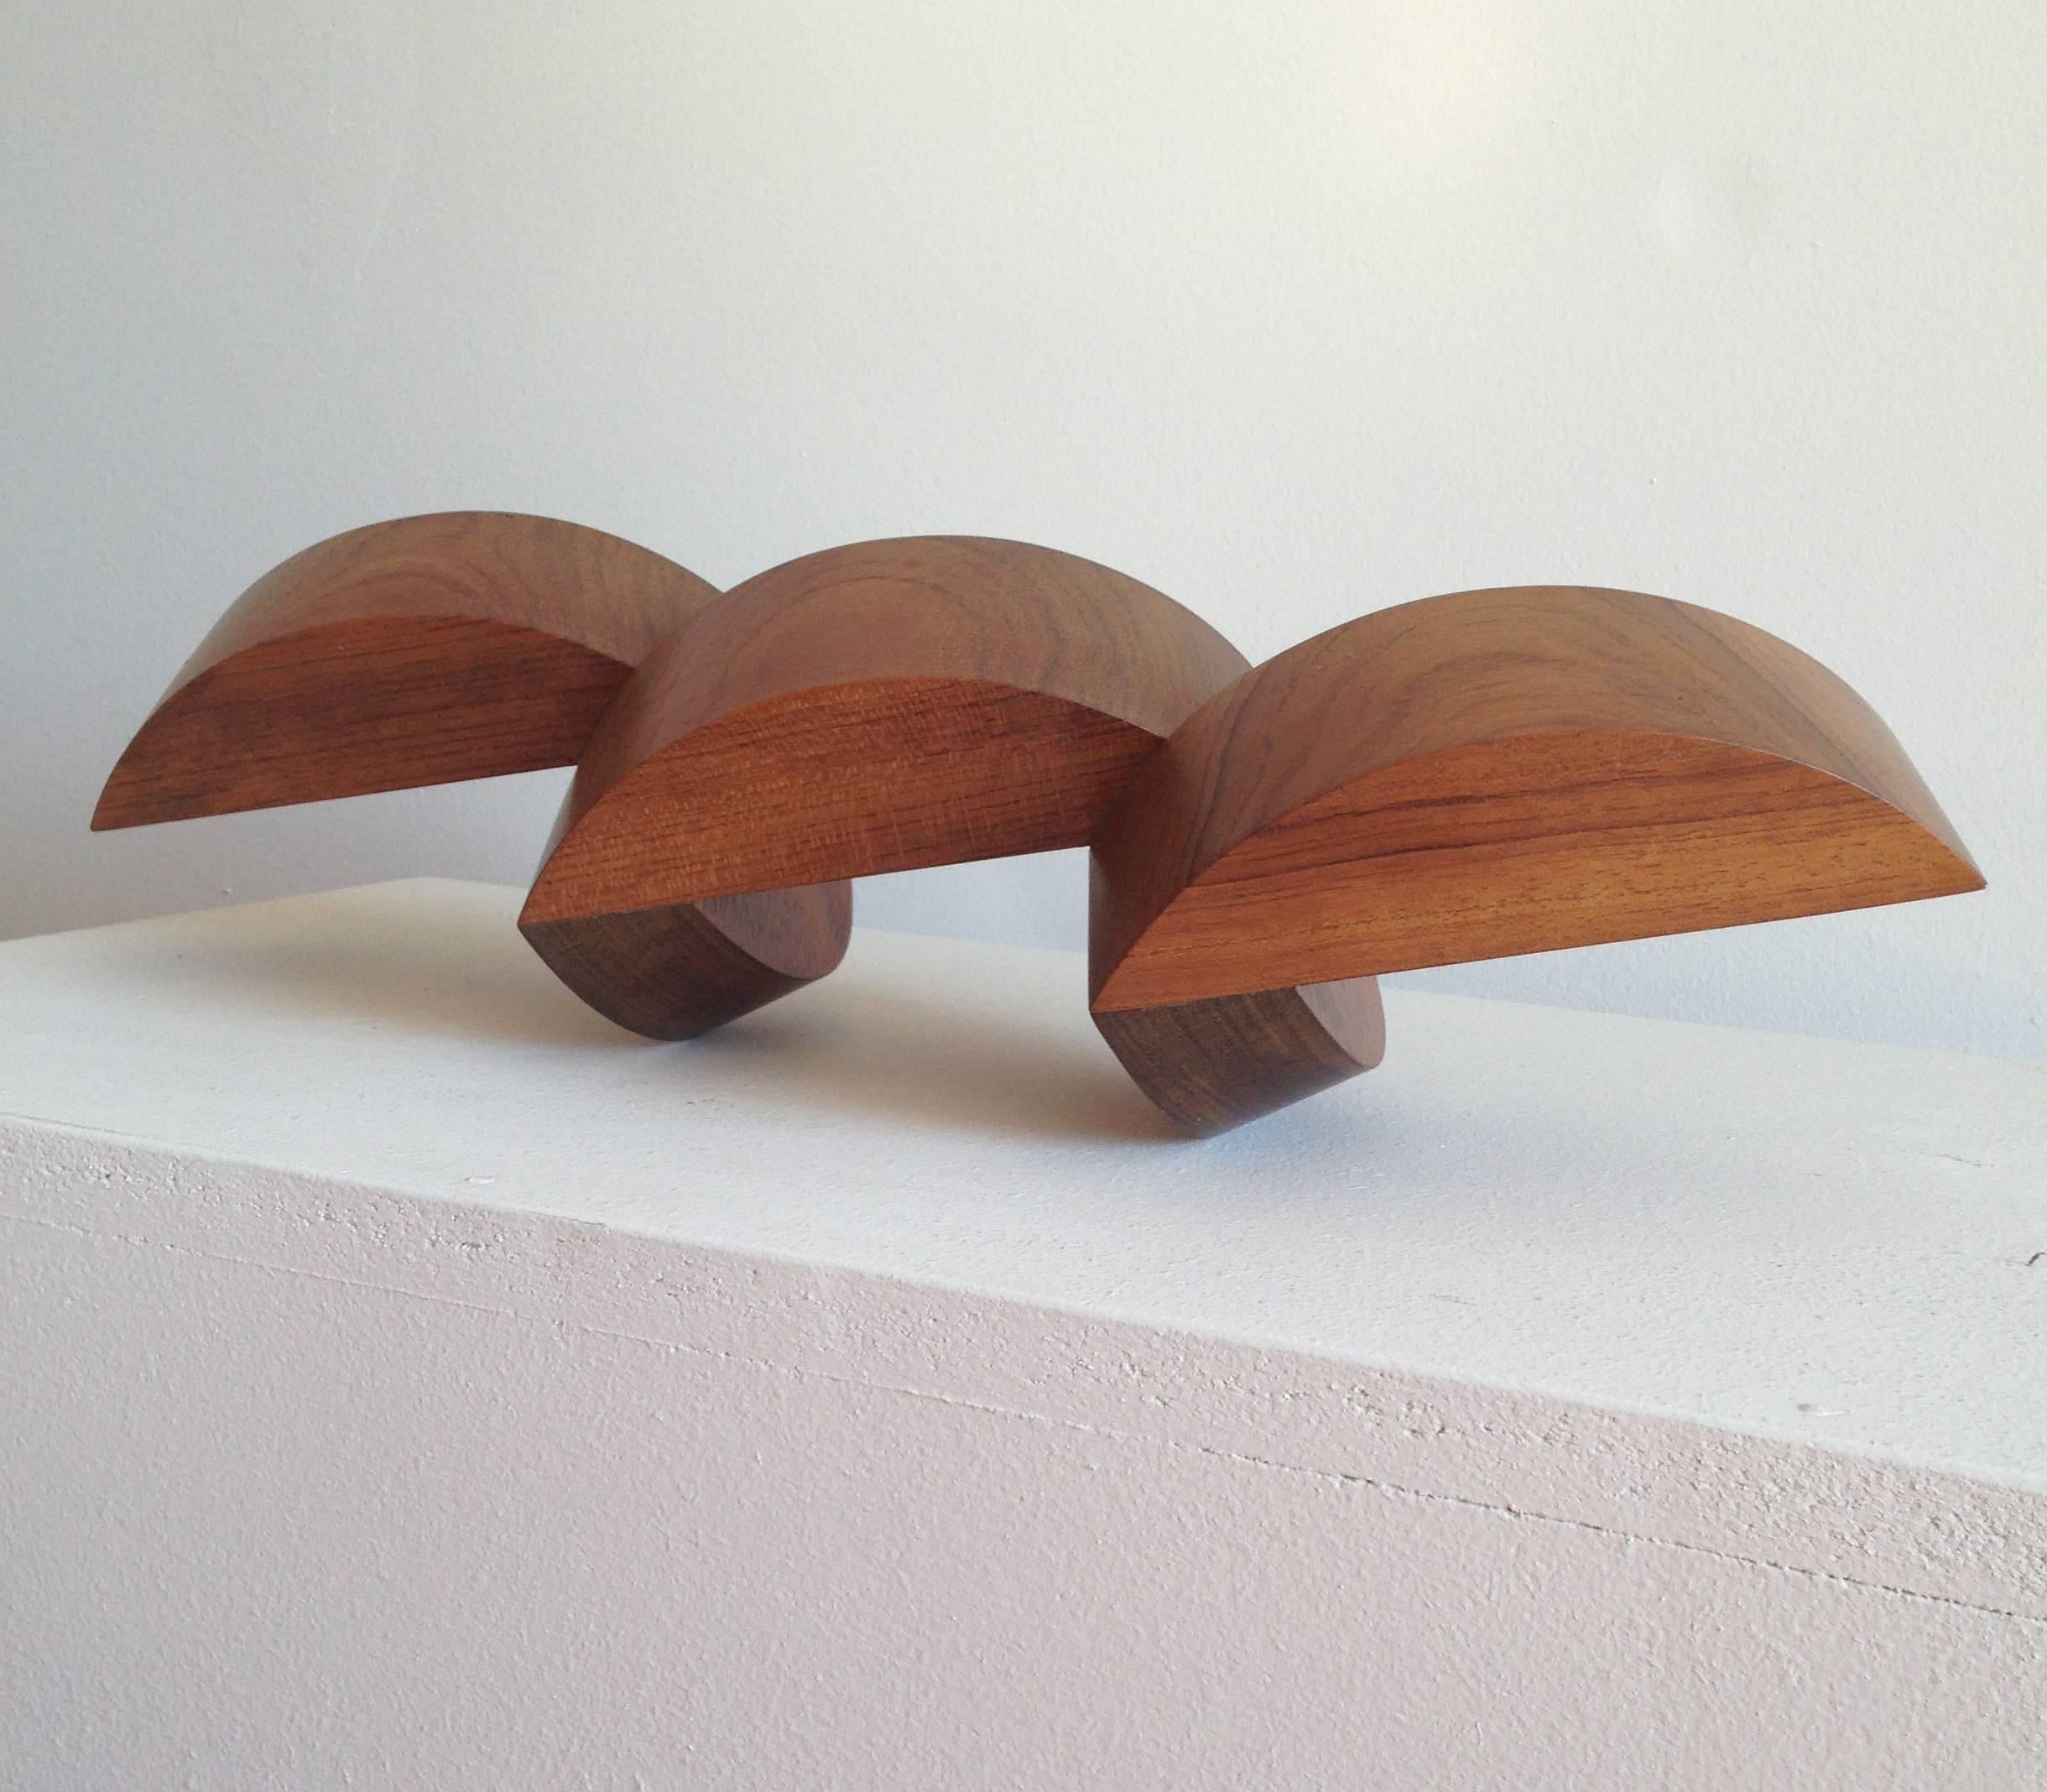 Three Segments (Small, Contemporary Mid Century Modern Inspired Wood Sculpture)